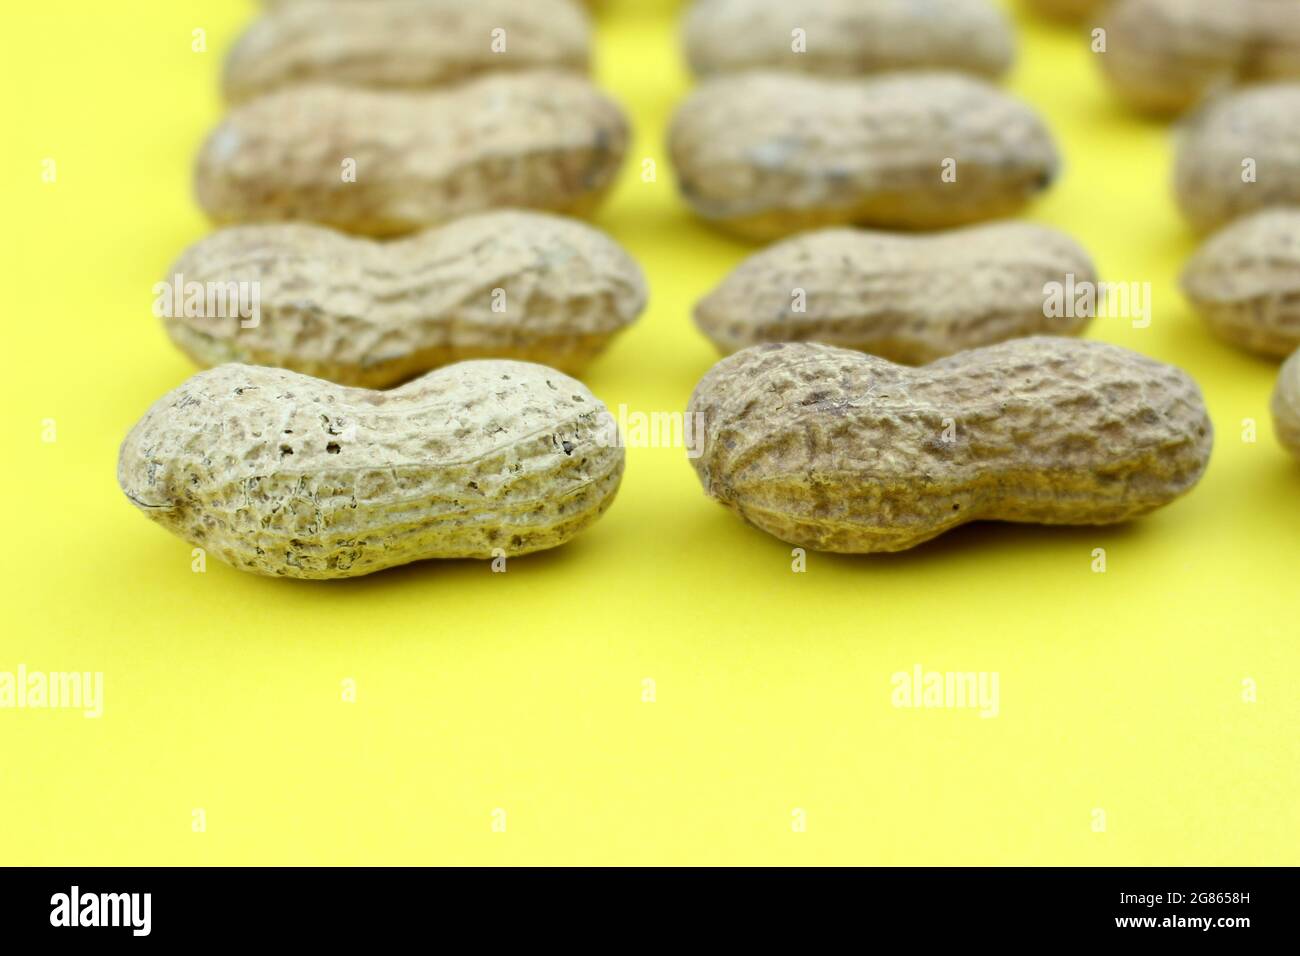 Peanuts Group of Arachis hypogaea on the yellow background Stock Photo